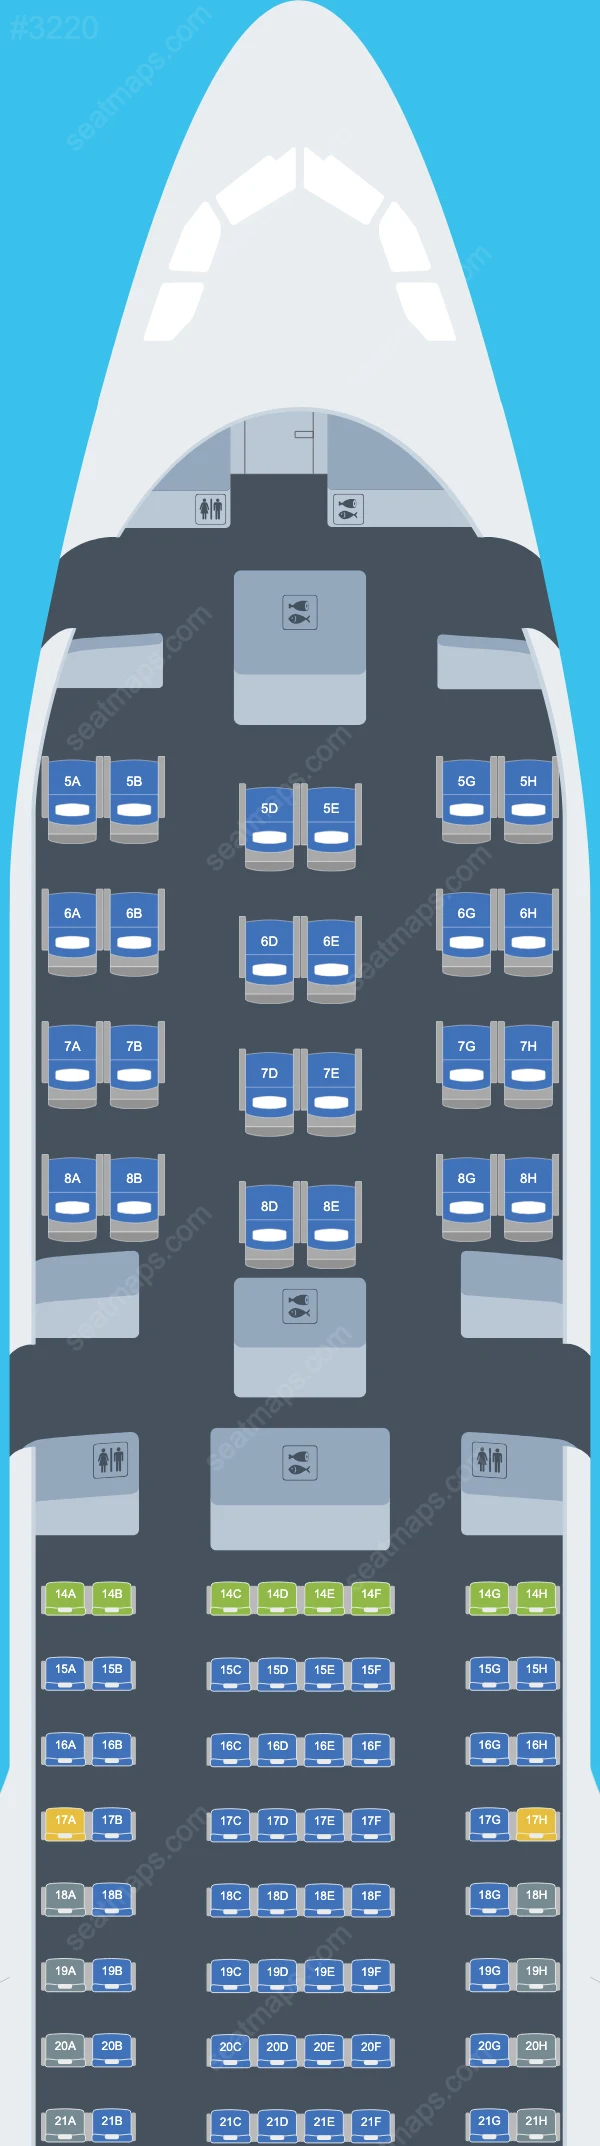 Aerolineas Argentinas Airbus A330 Seat Maps A330-200 V.2